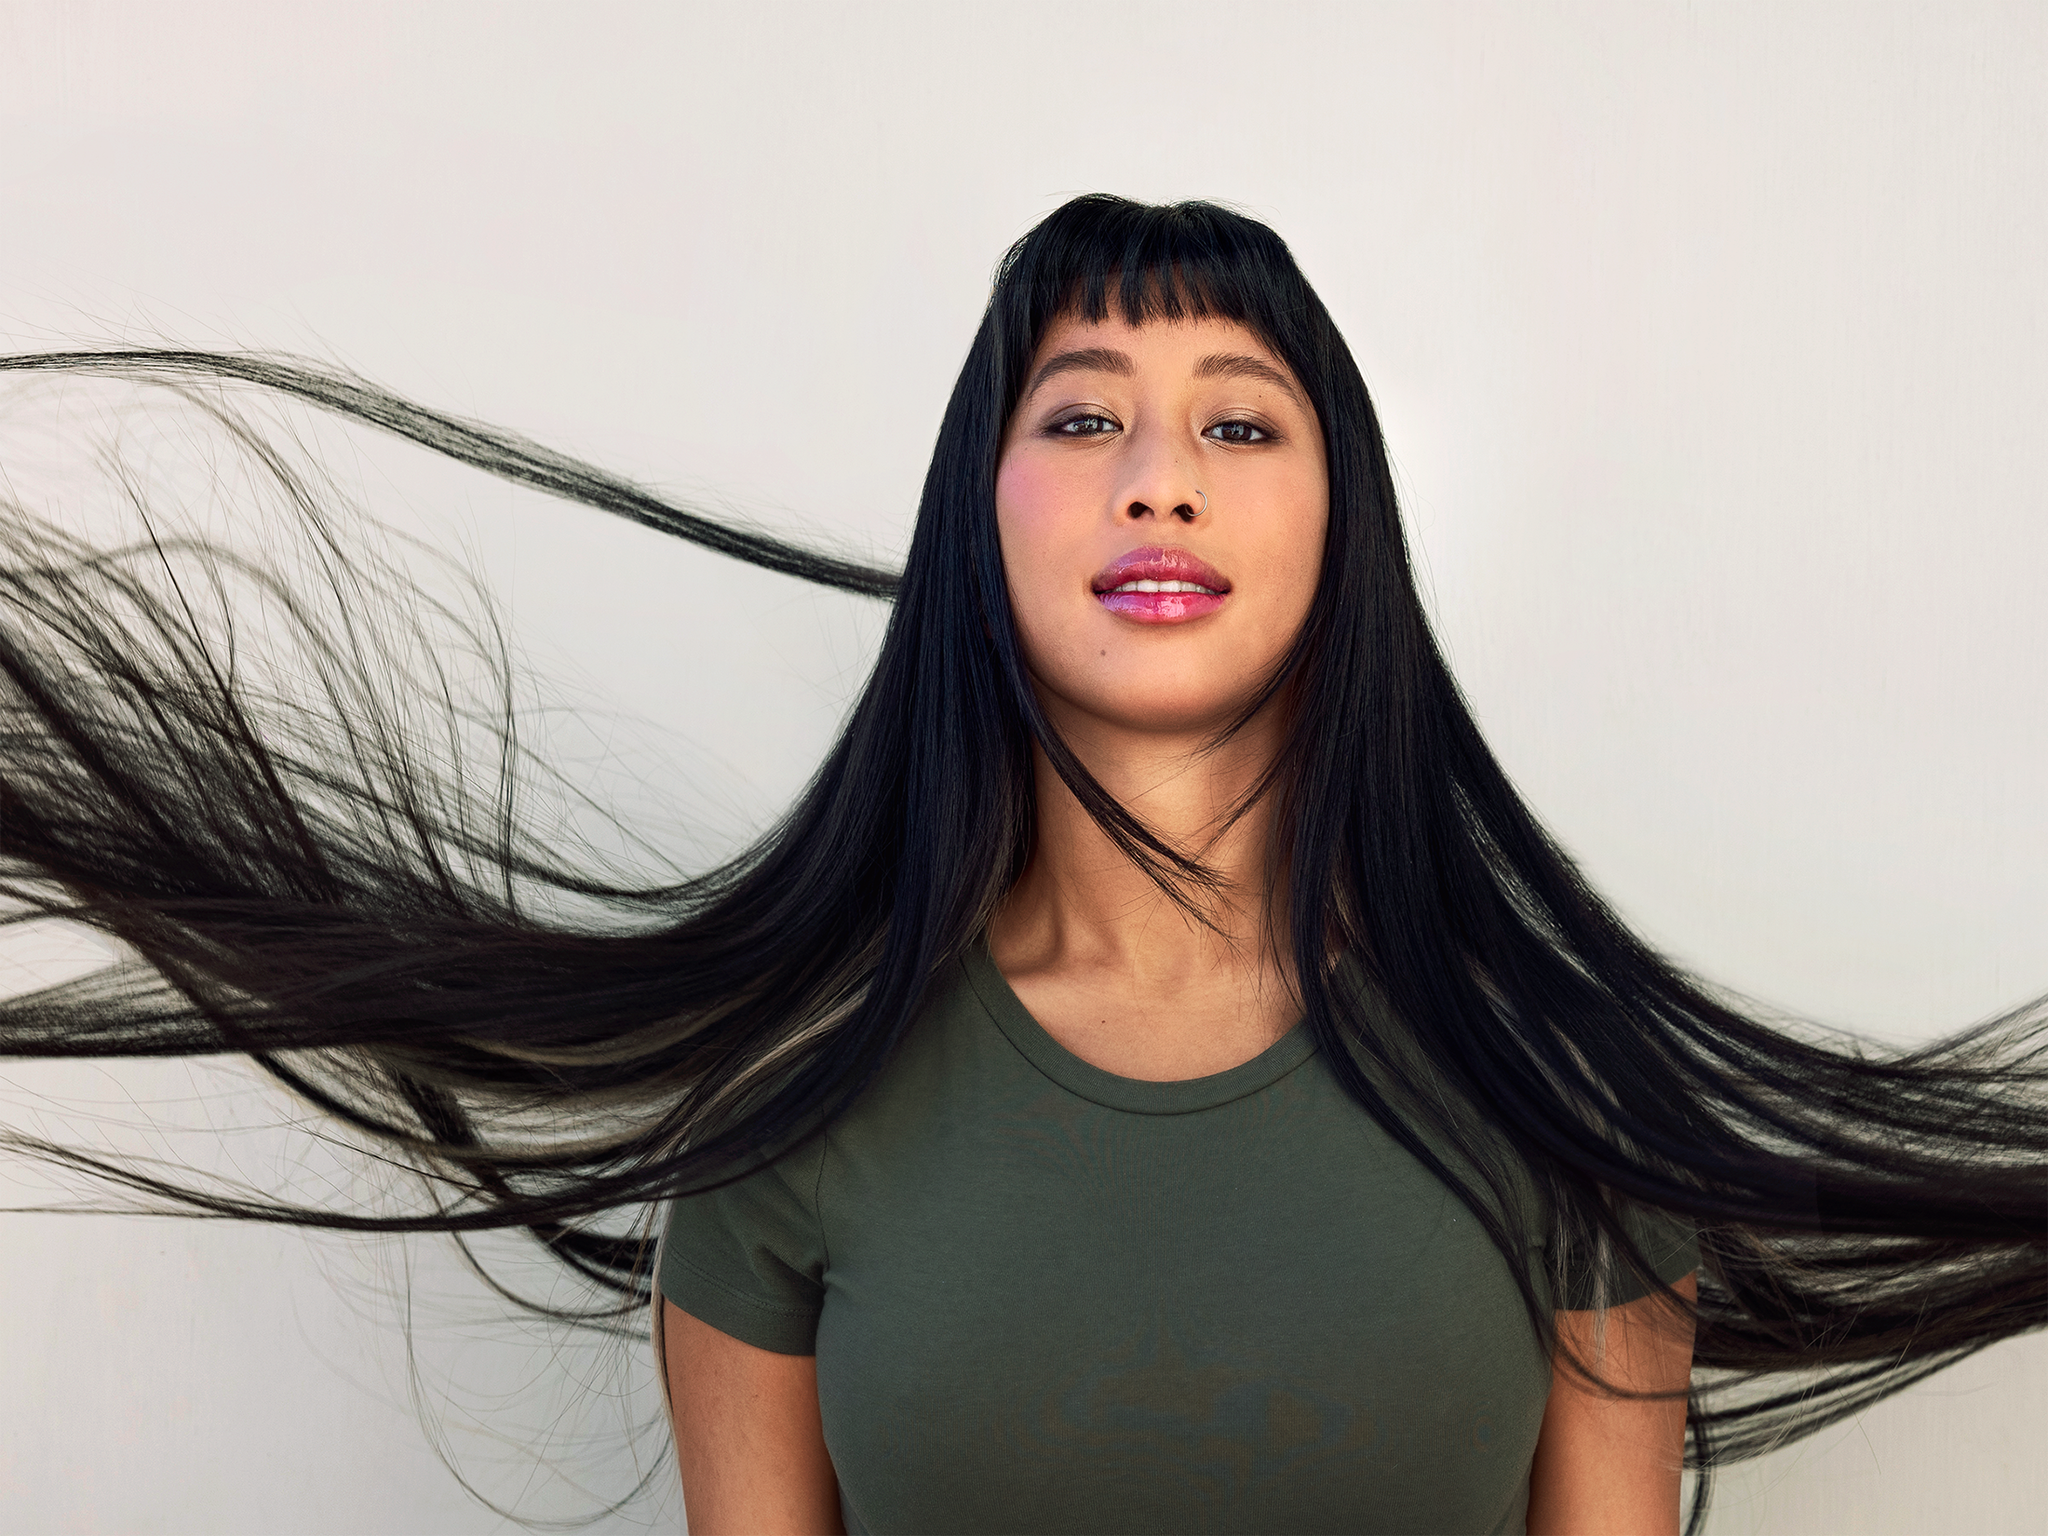 Asian Porn Star Long Hair - Asian American Porn Actress Jade Kush Is Sick Of Racist Roles